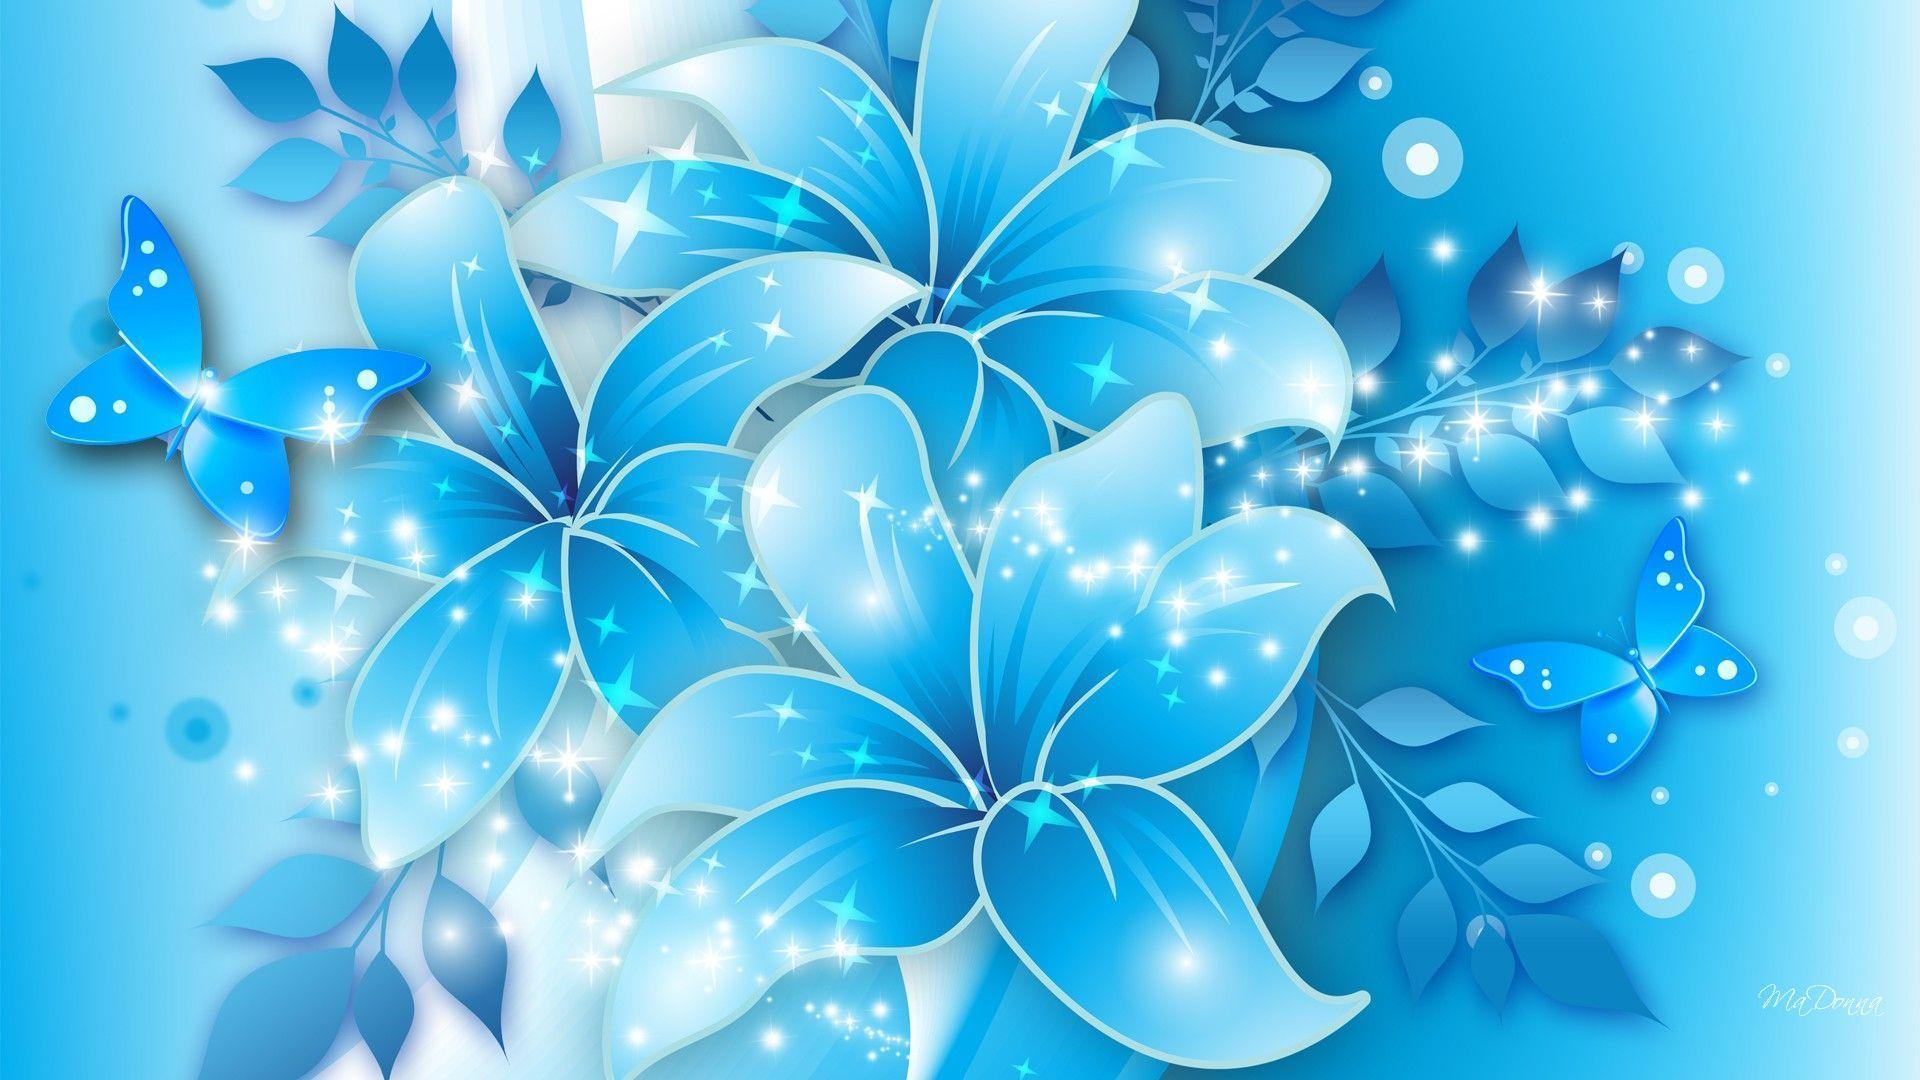 Pretty Blue Flowers S Pretty Flowers S Tumblr